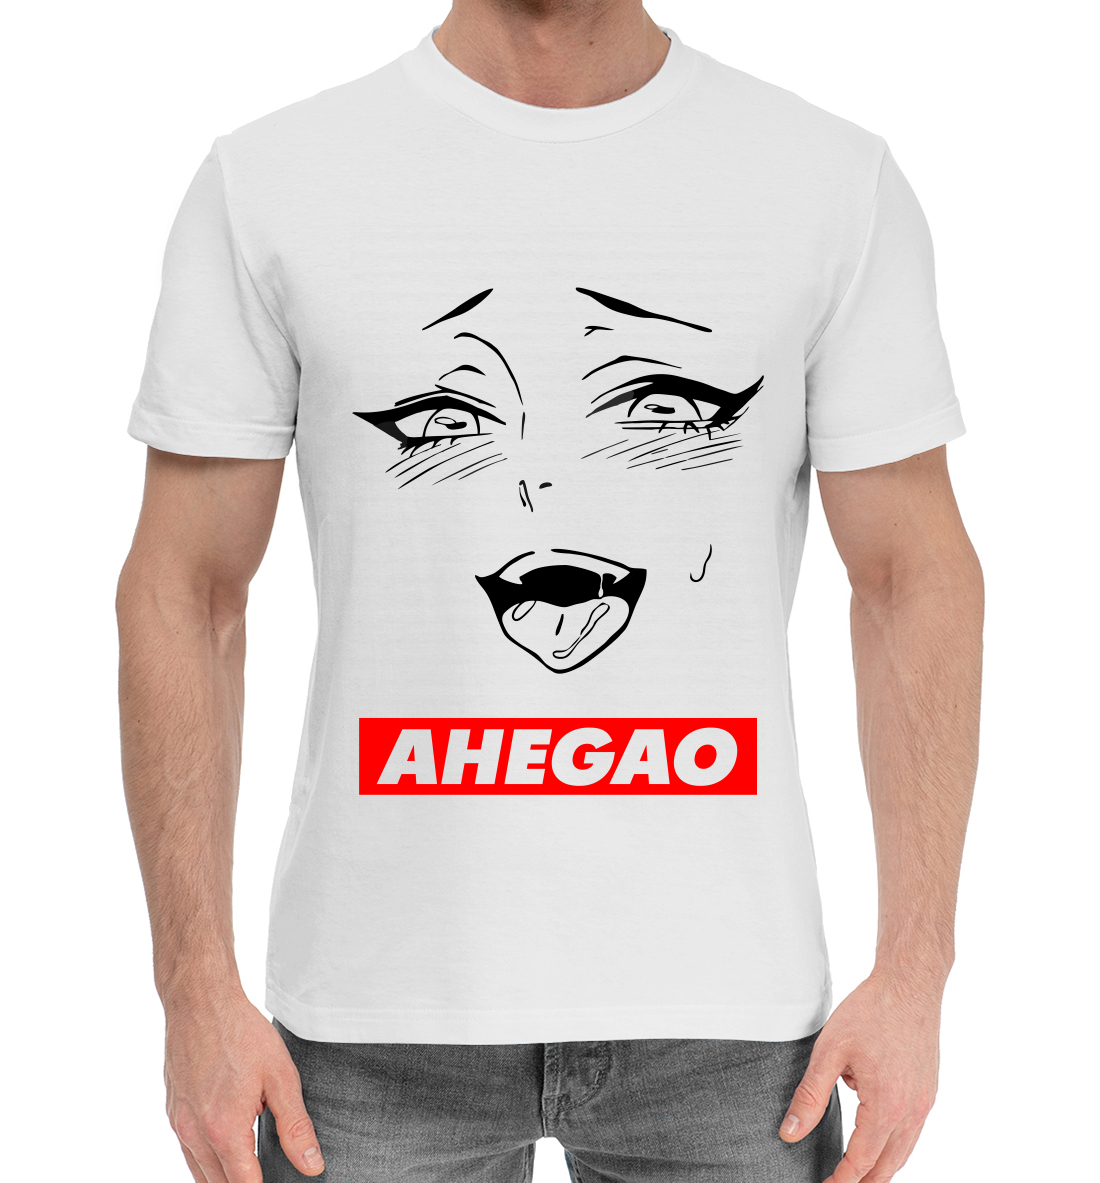 Мужская Хлопковая футболка с принтом Ahegao, артикул AHG-697028-hfu-2mp